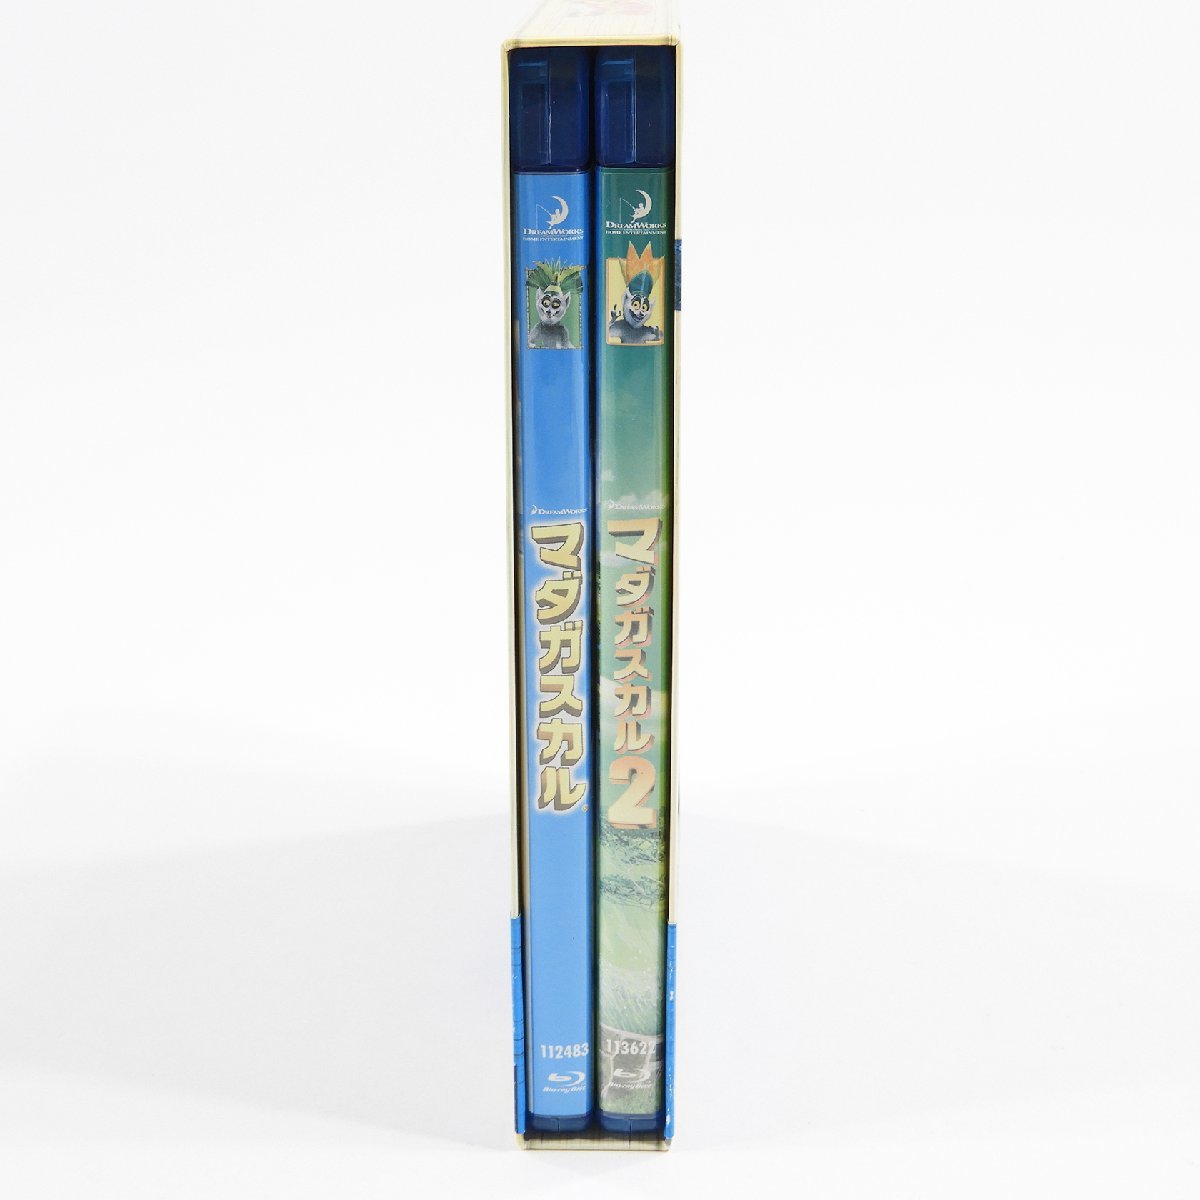 Blu-ray マダガスカル ブルーレイ ツイン・パック 2枚組 #14914 送料360円 DVD ドリームワークス_画像6